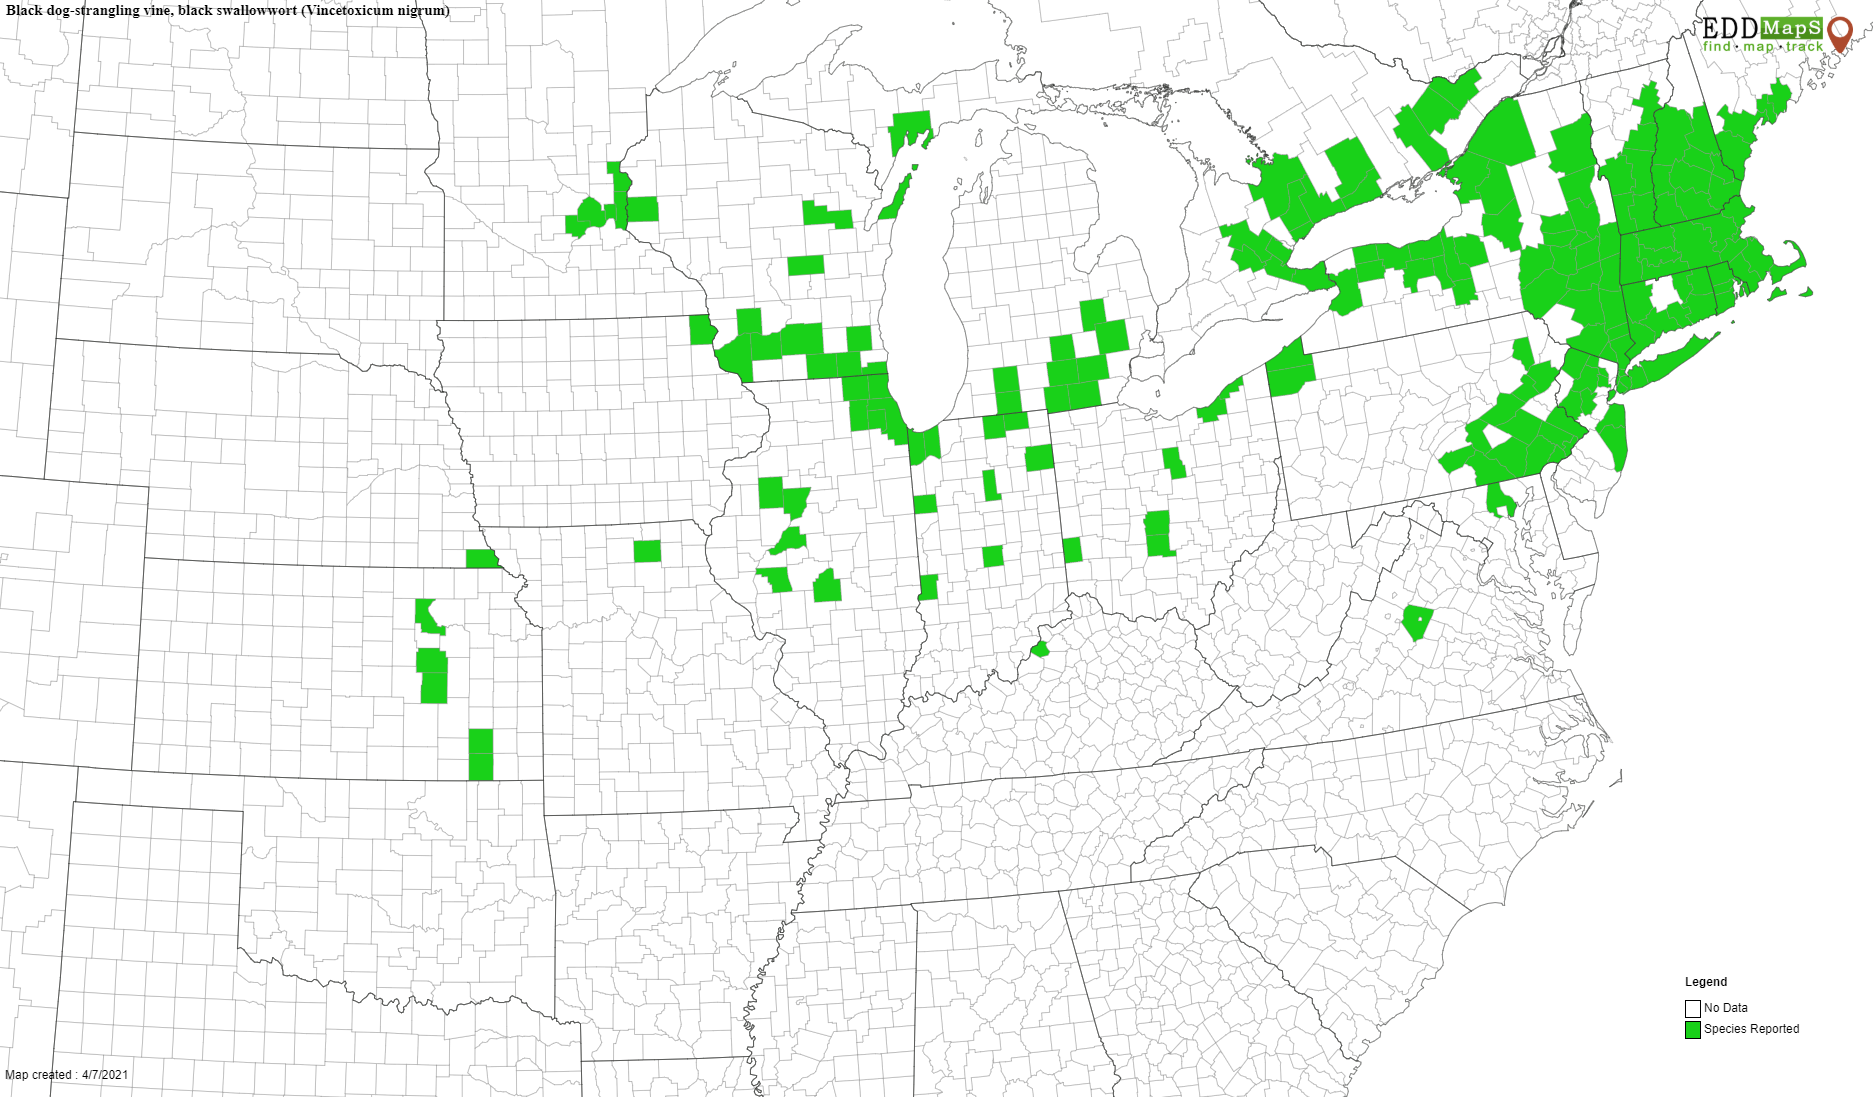 Black Swallow-wort Distribution Map